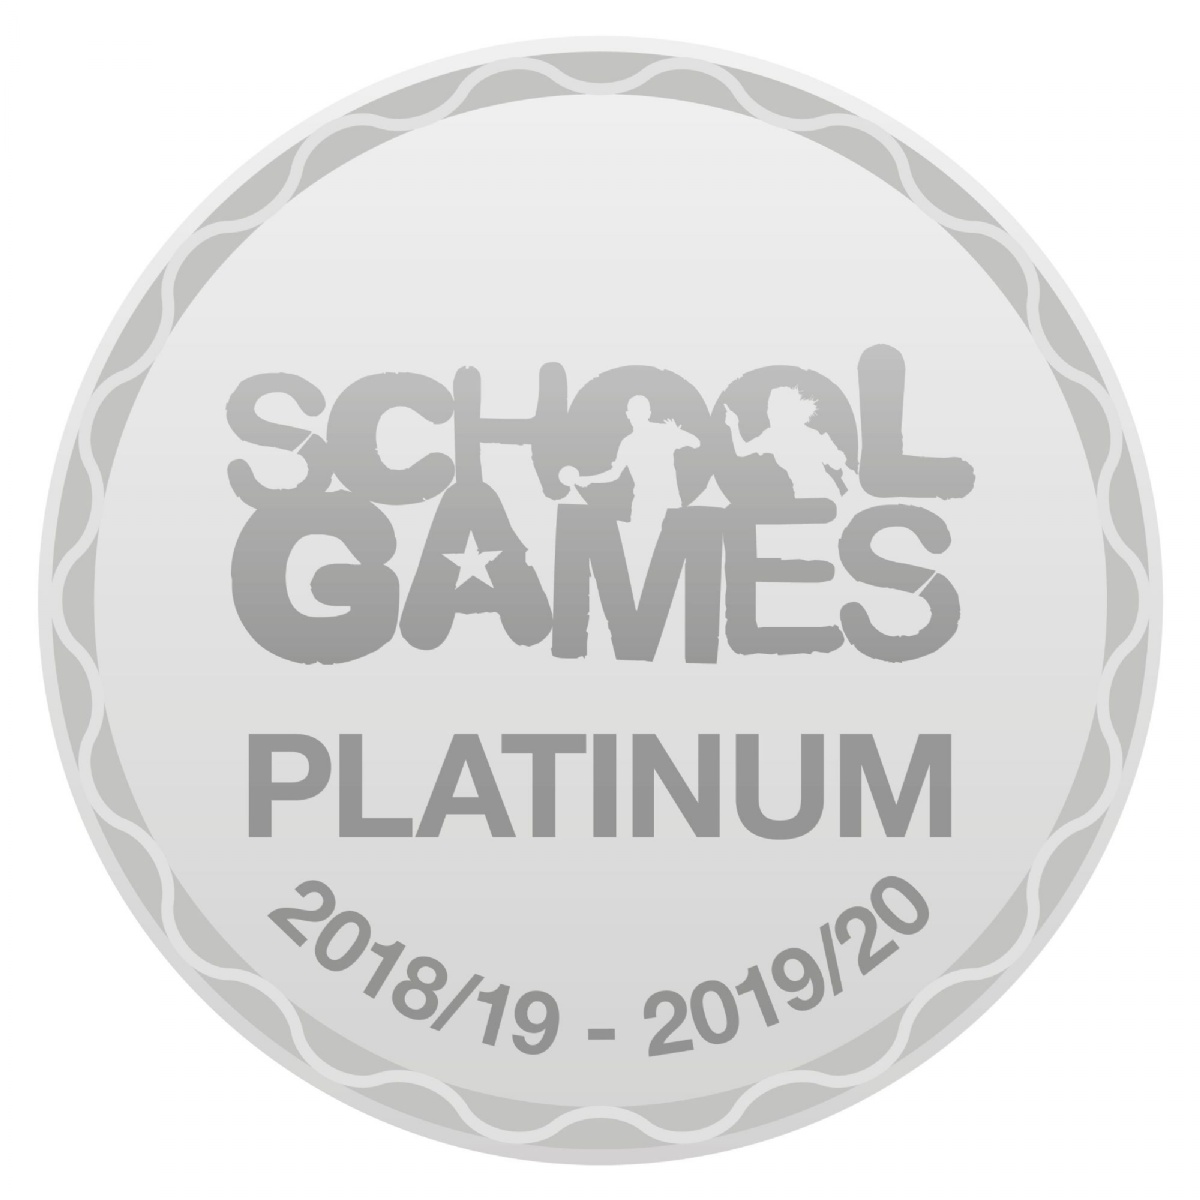 Image result for school games platinum 2019